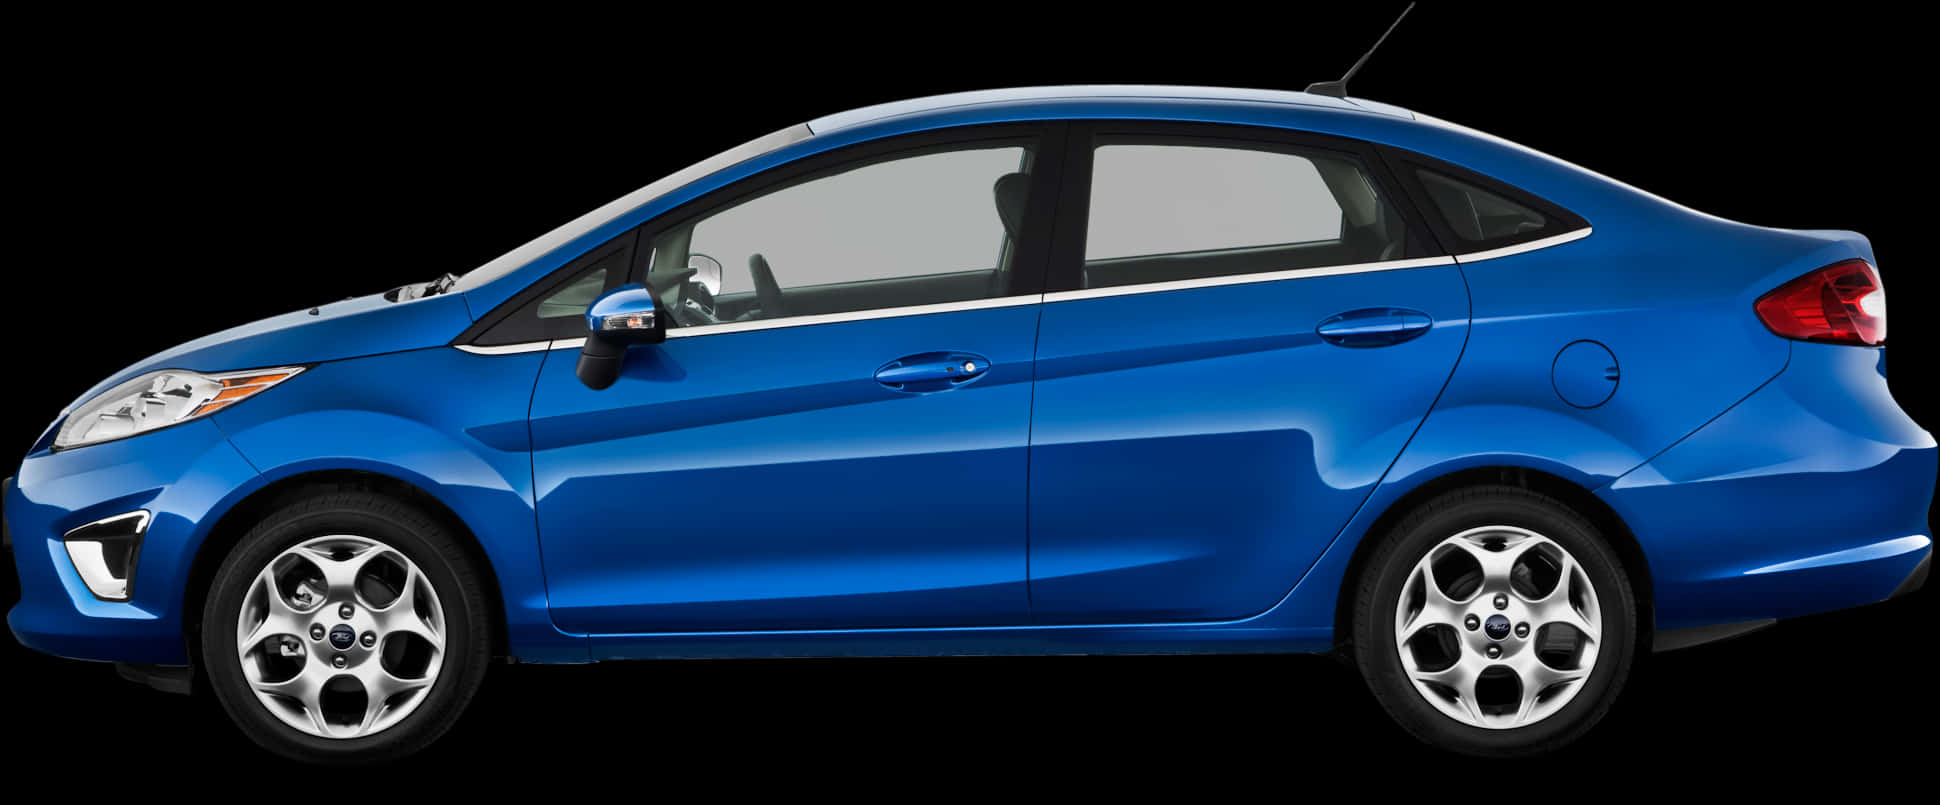 Blue Compact Sedan Side View